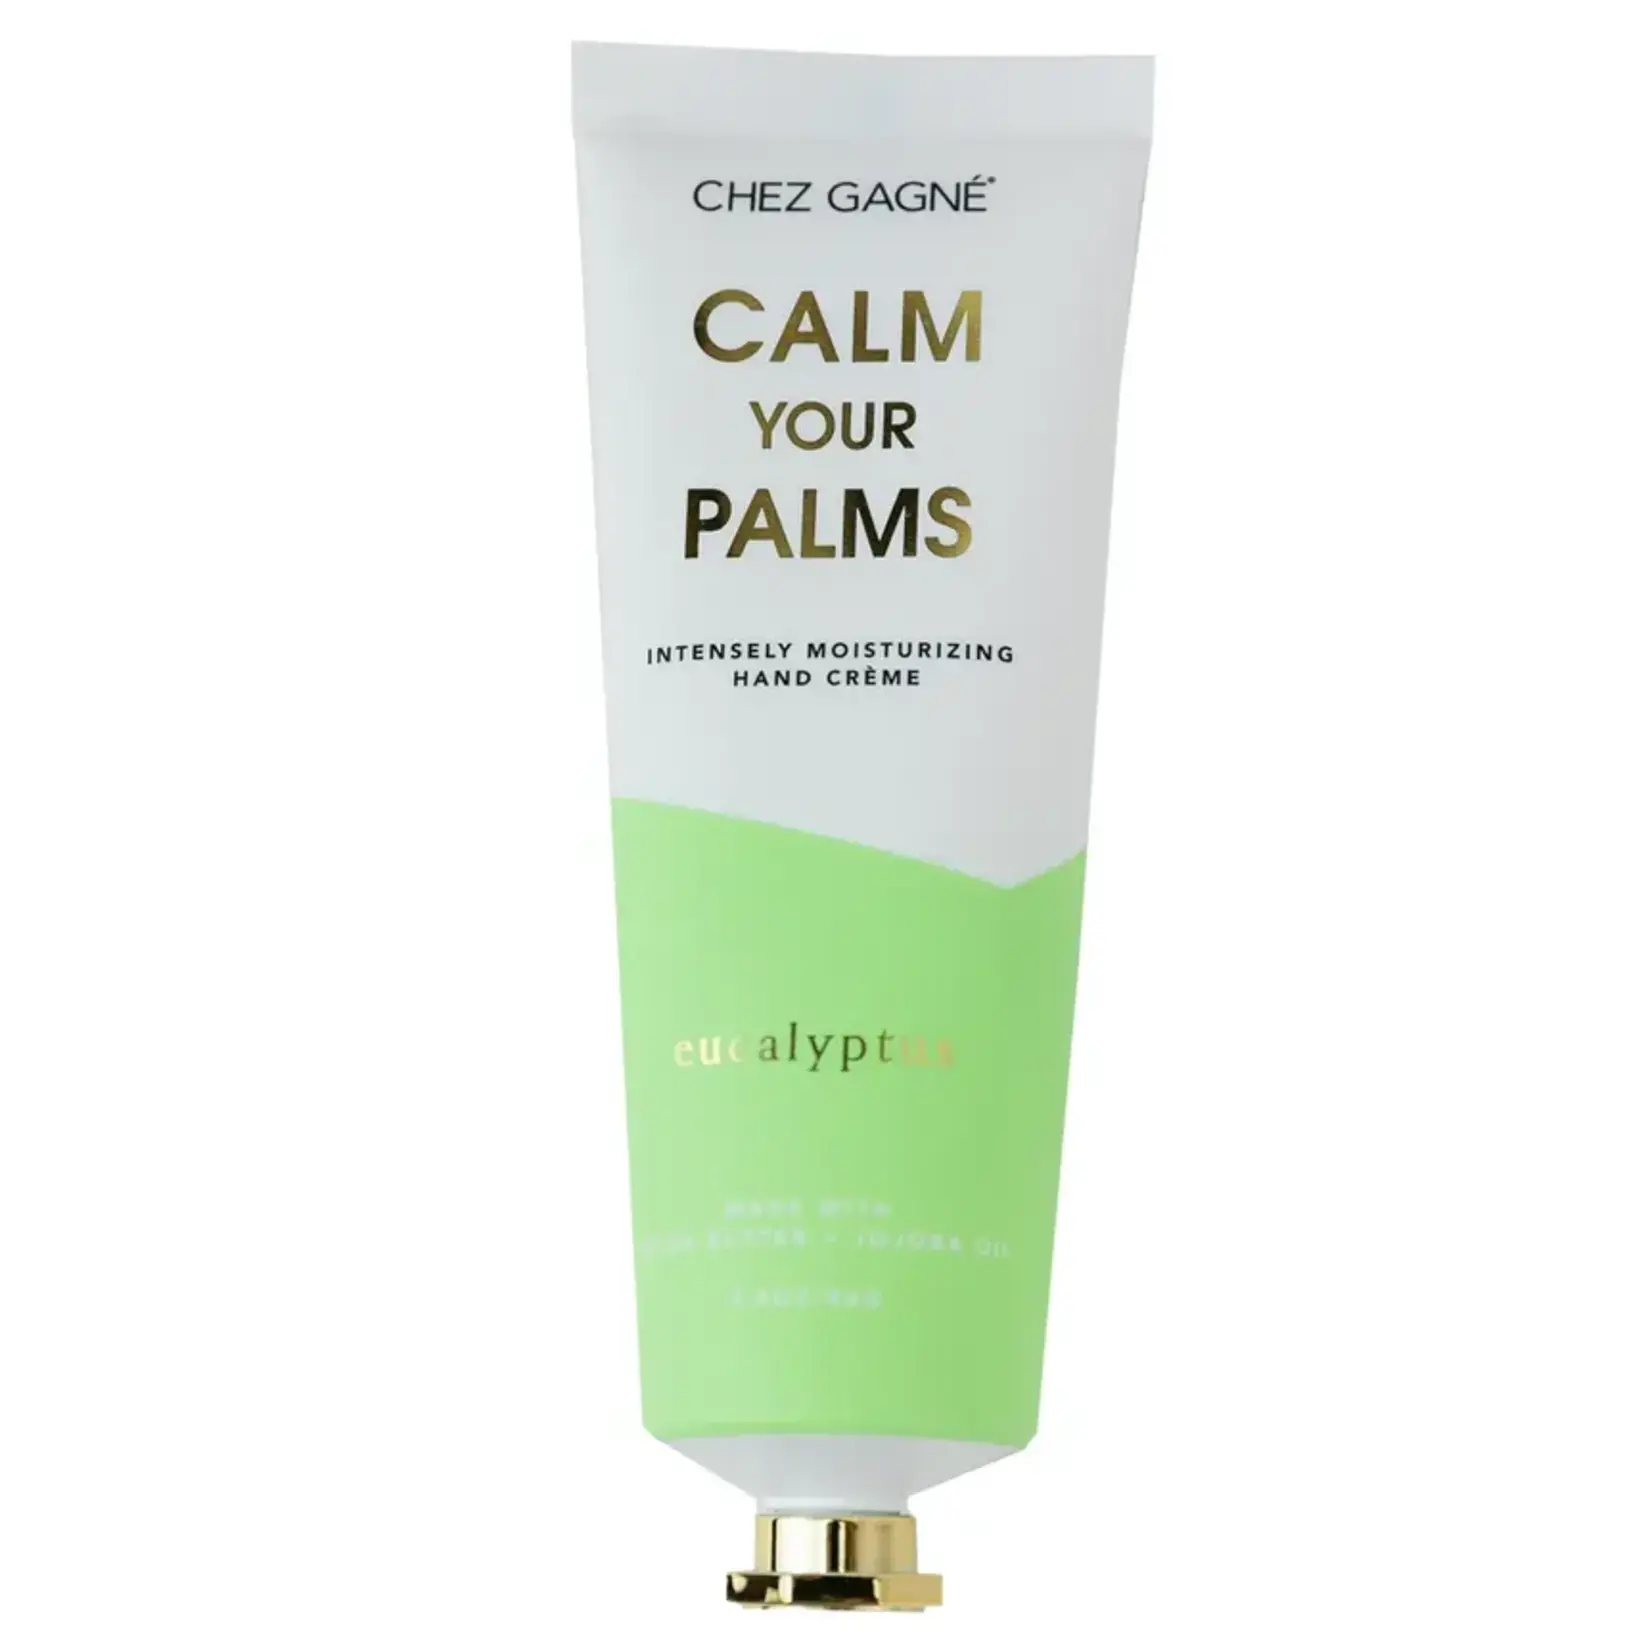 Chez Gagné Calm Your Palms Hand Crème - Eucalyptus